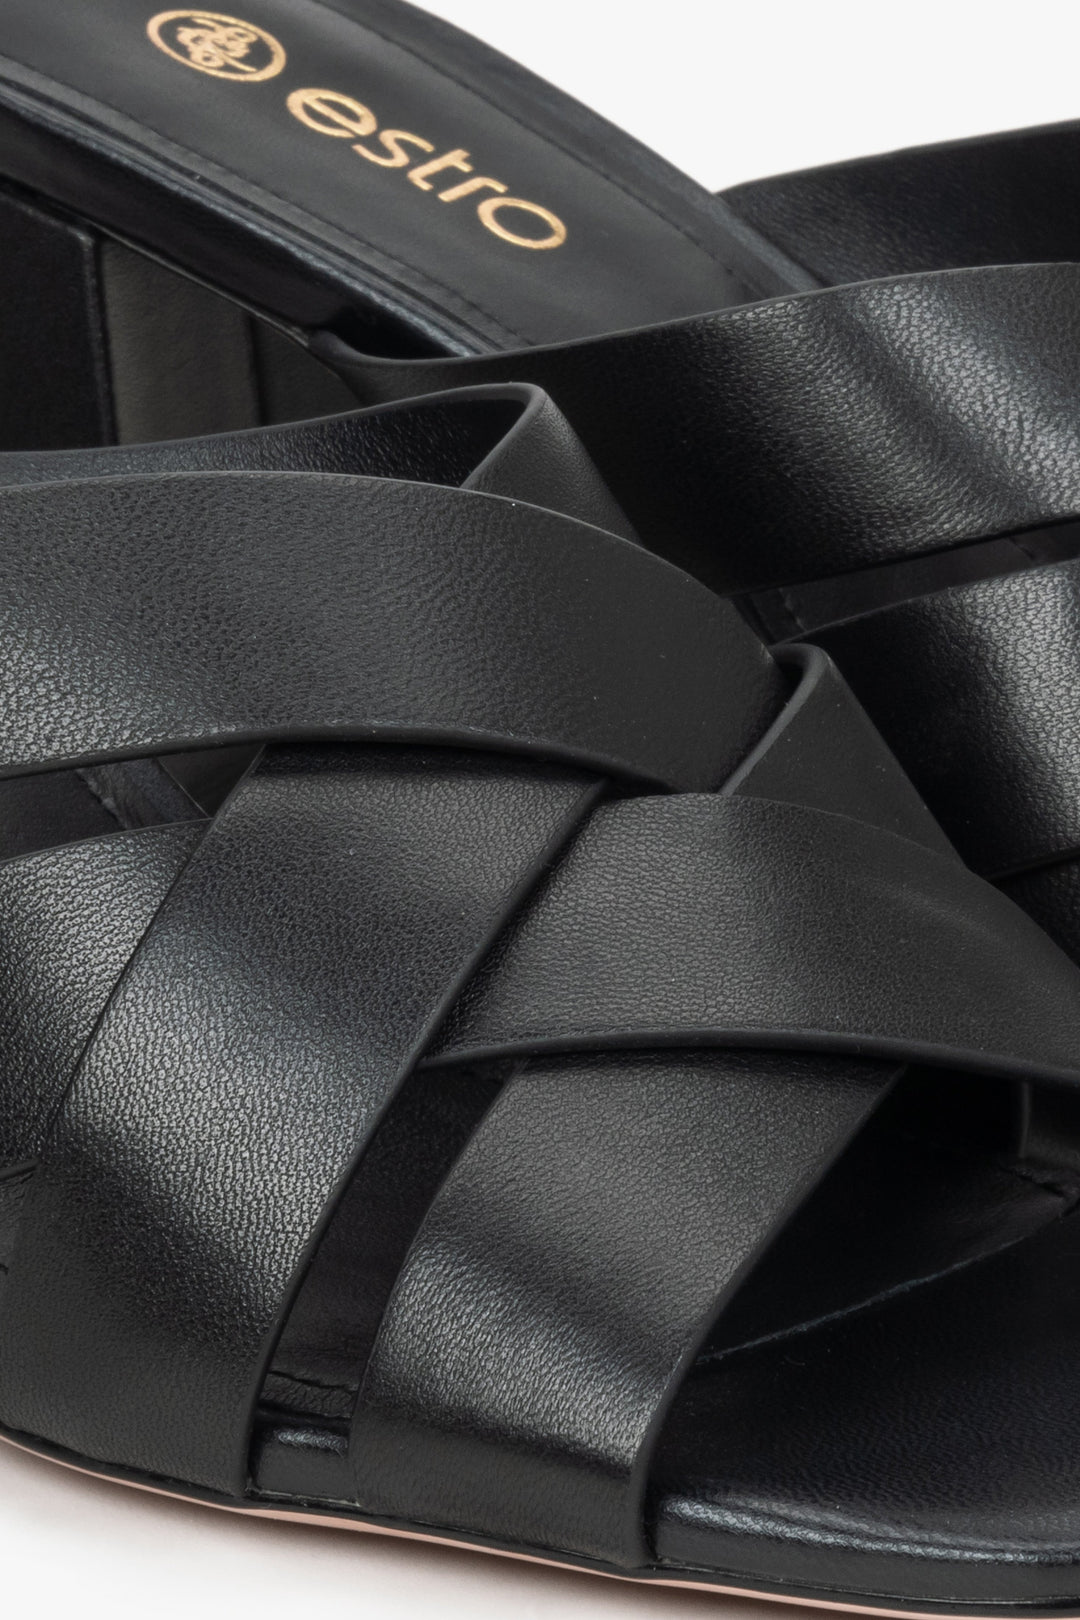 Women's black sandals with Estro heels - close-up on details.